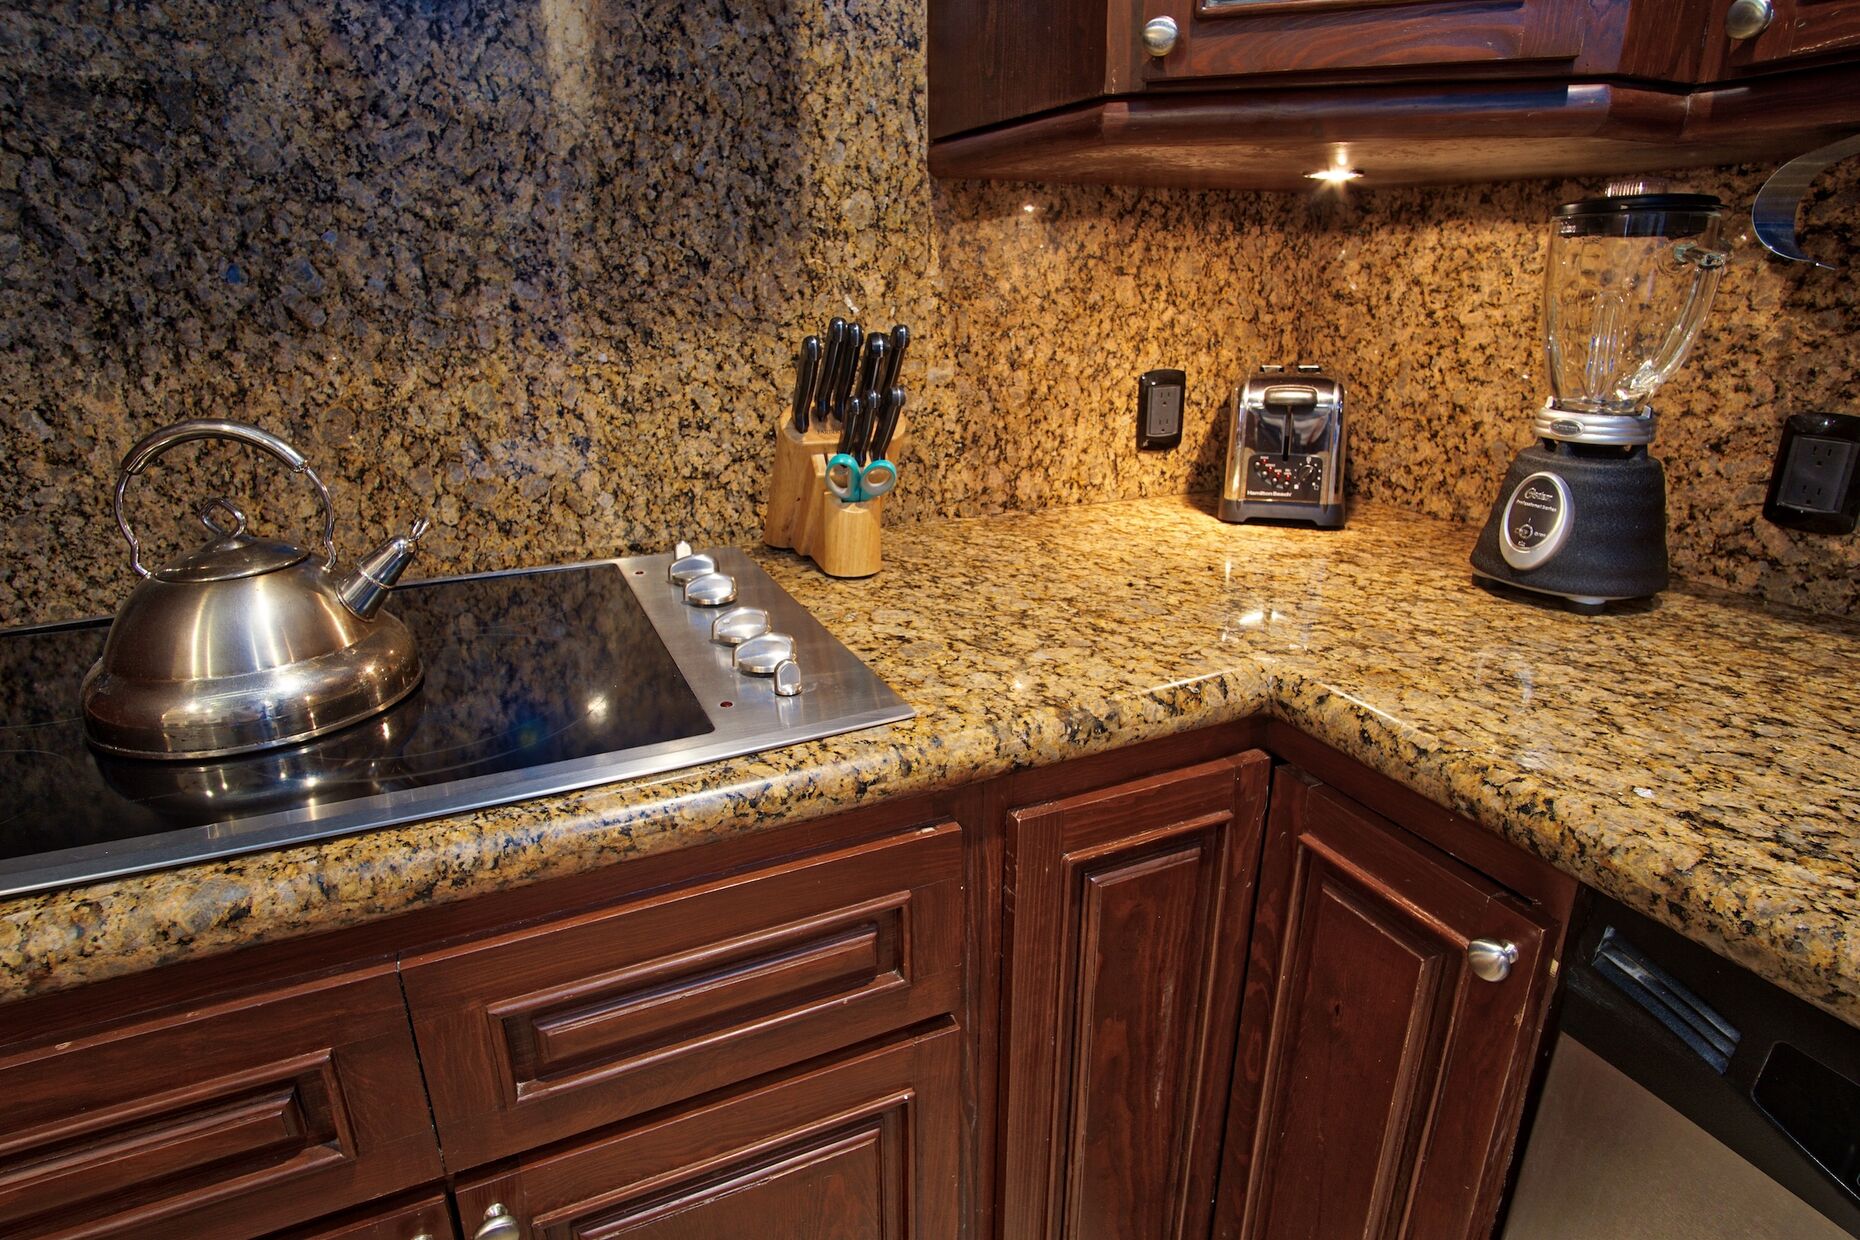 Kitchen detail. Nice granite counters.